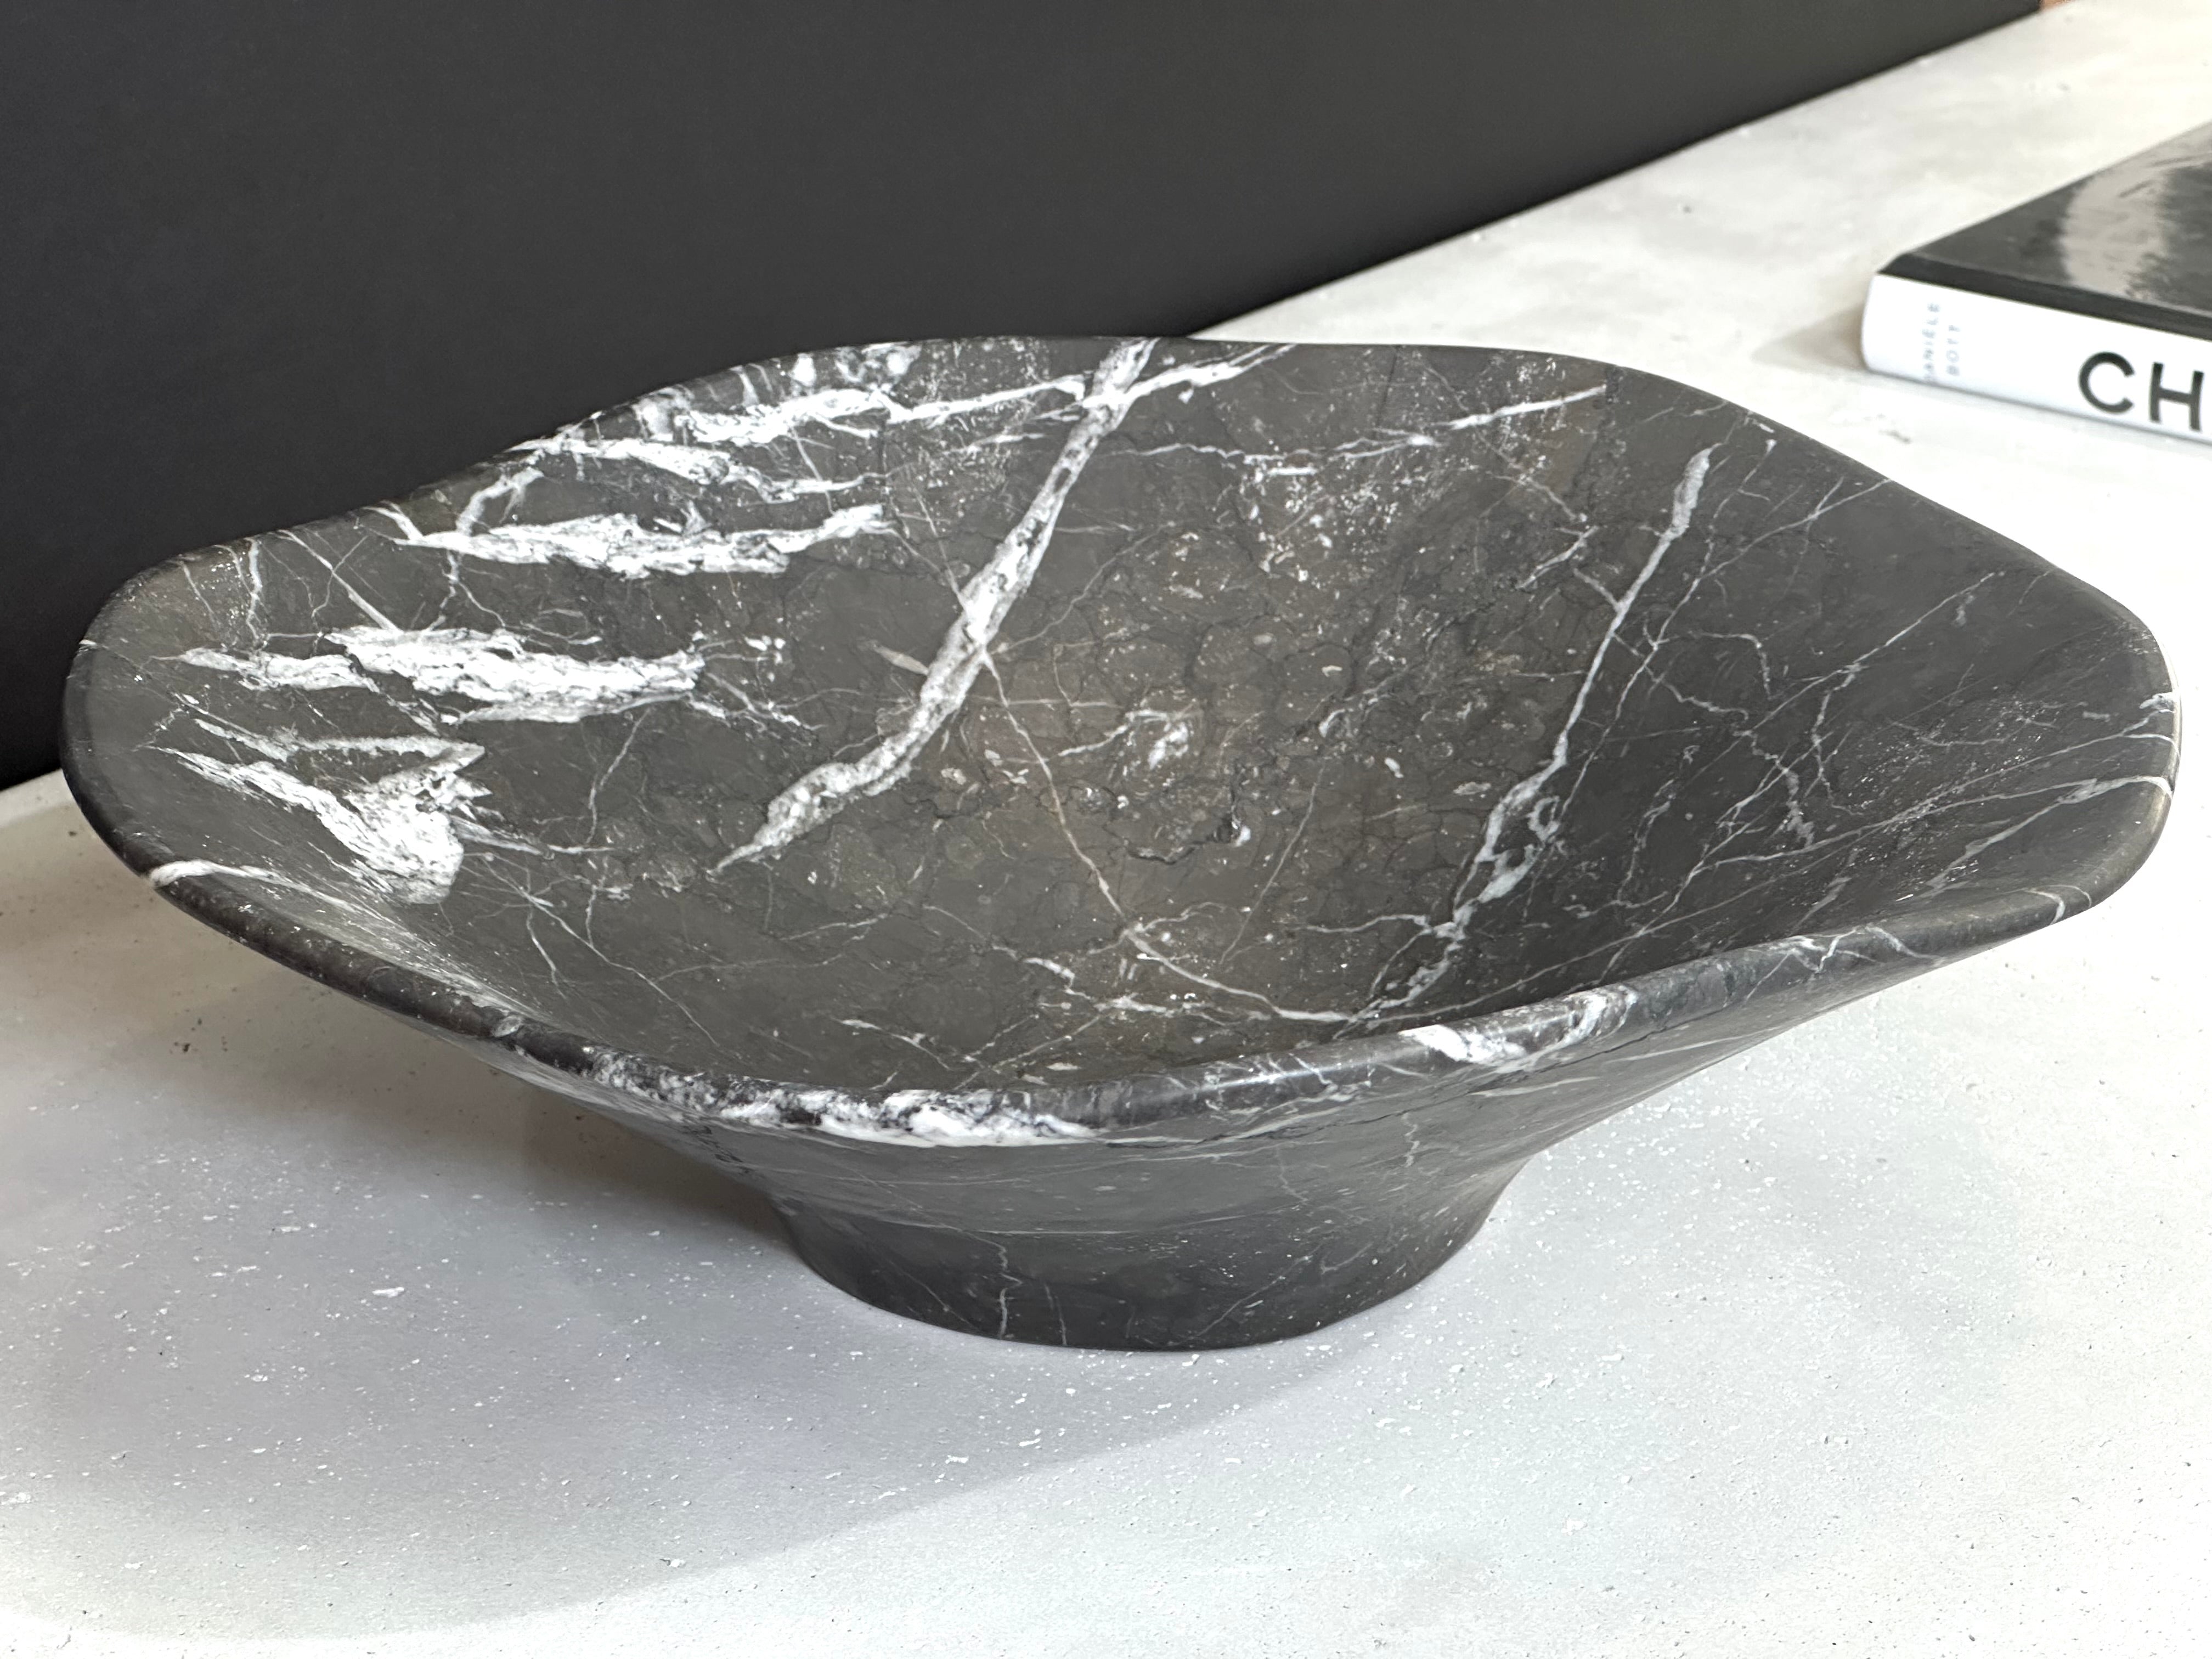 Black Marble Decorative Bowl